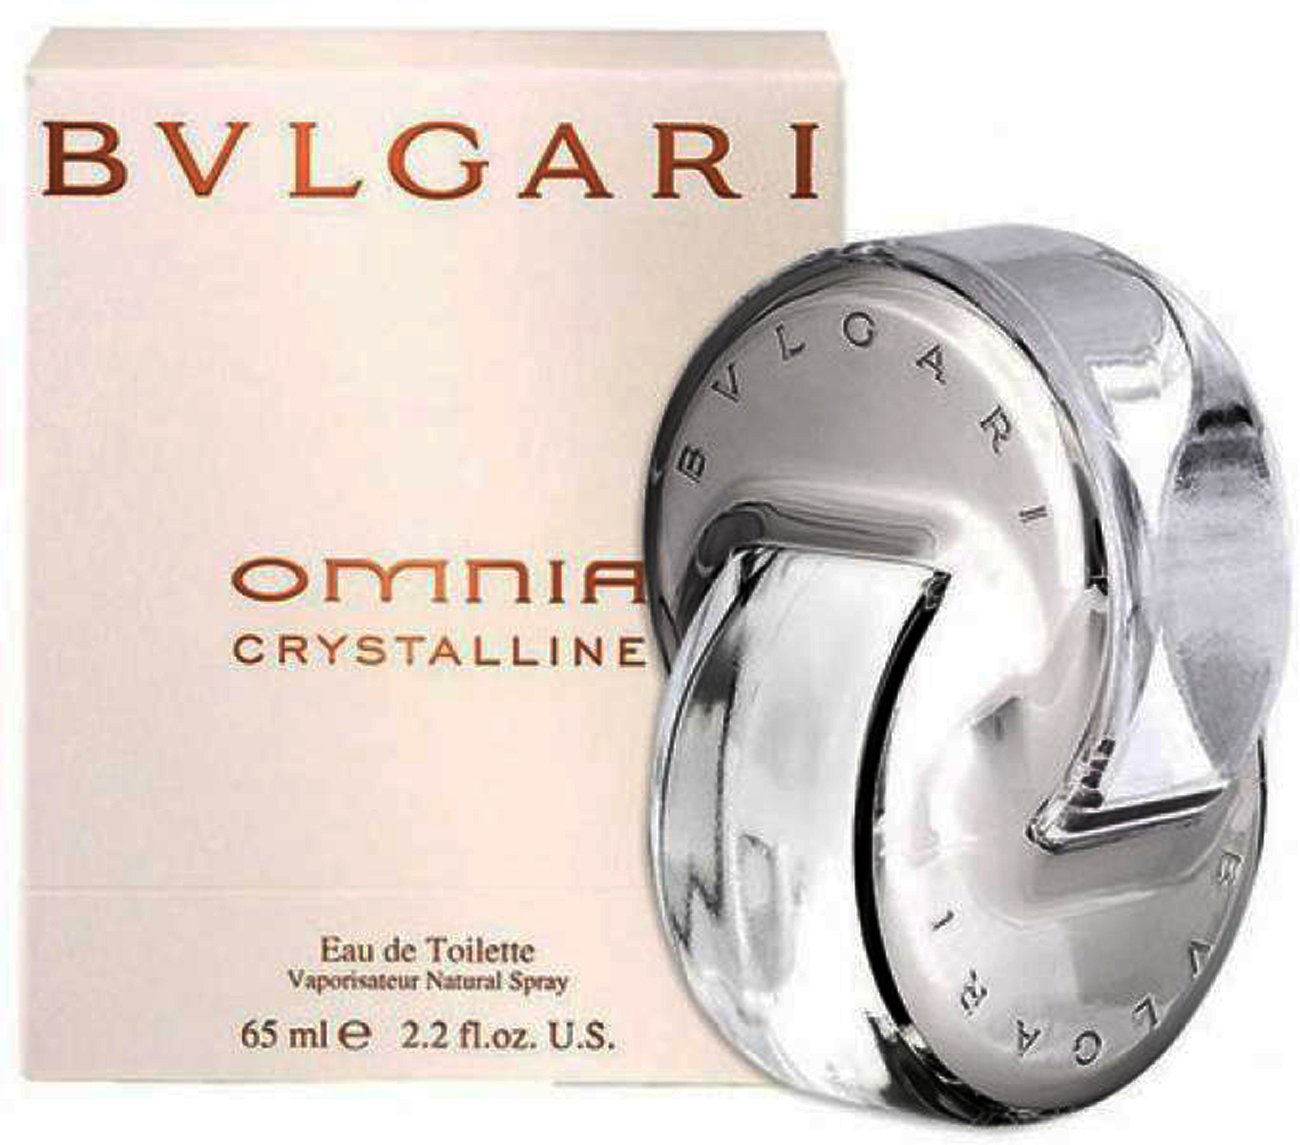 Bvlgari Omnia Crystalline EDT 65ml women New